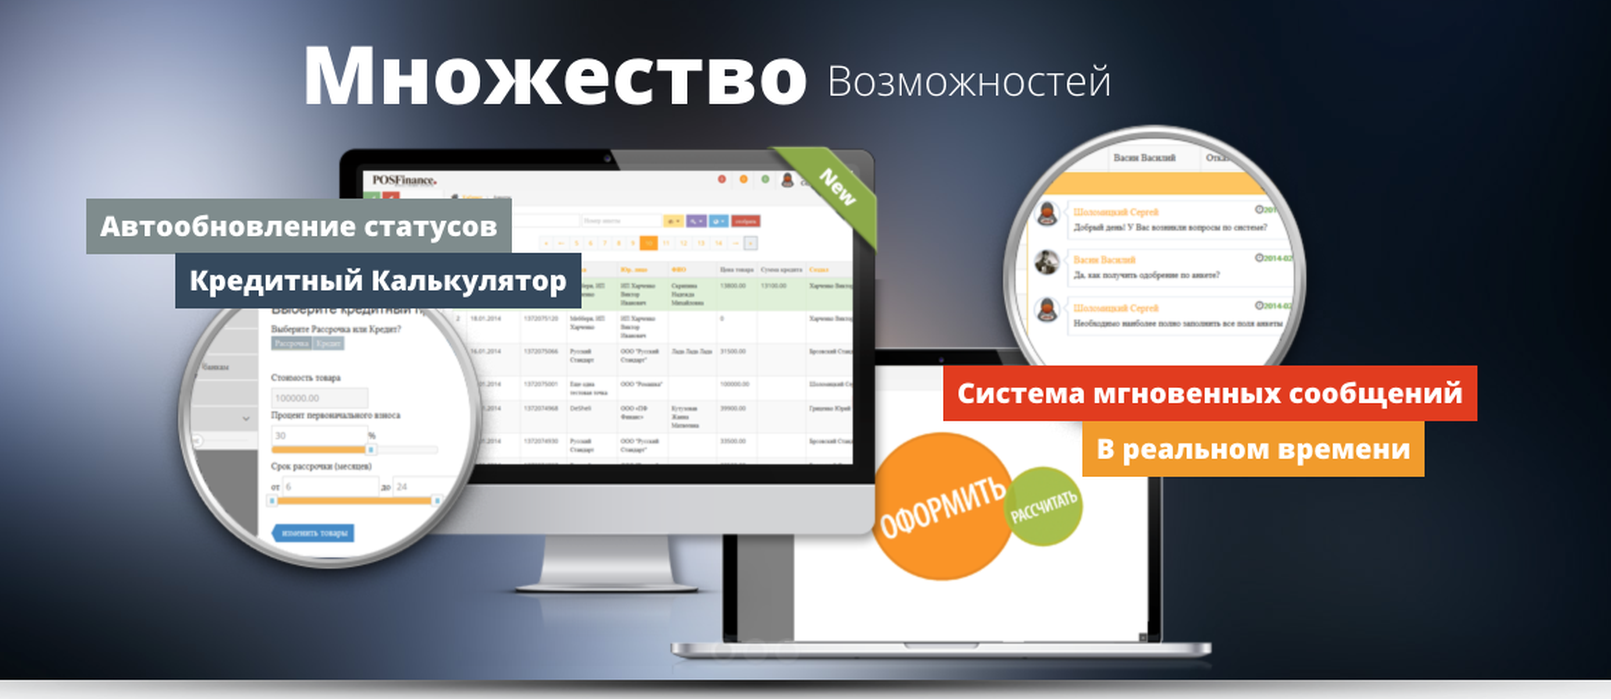 Сайт Posfinance.ru